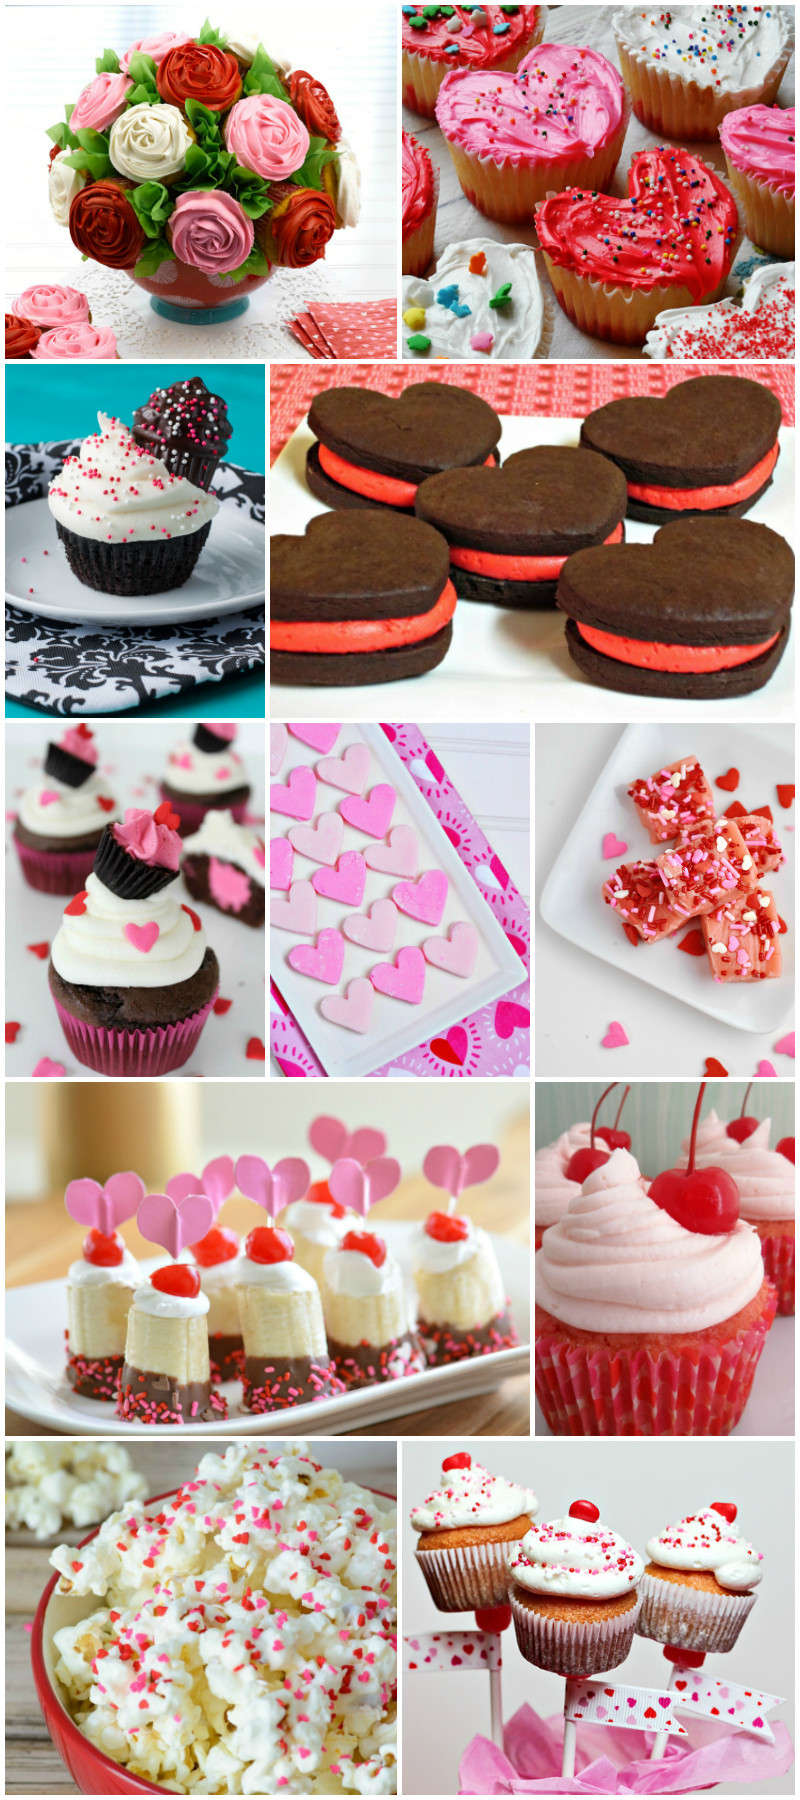 Valentine'S Day Desserts
 50 Cute and Delicious Valentine’s Day Dessert Recipes